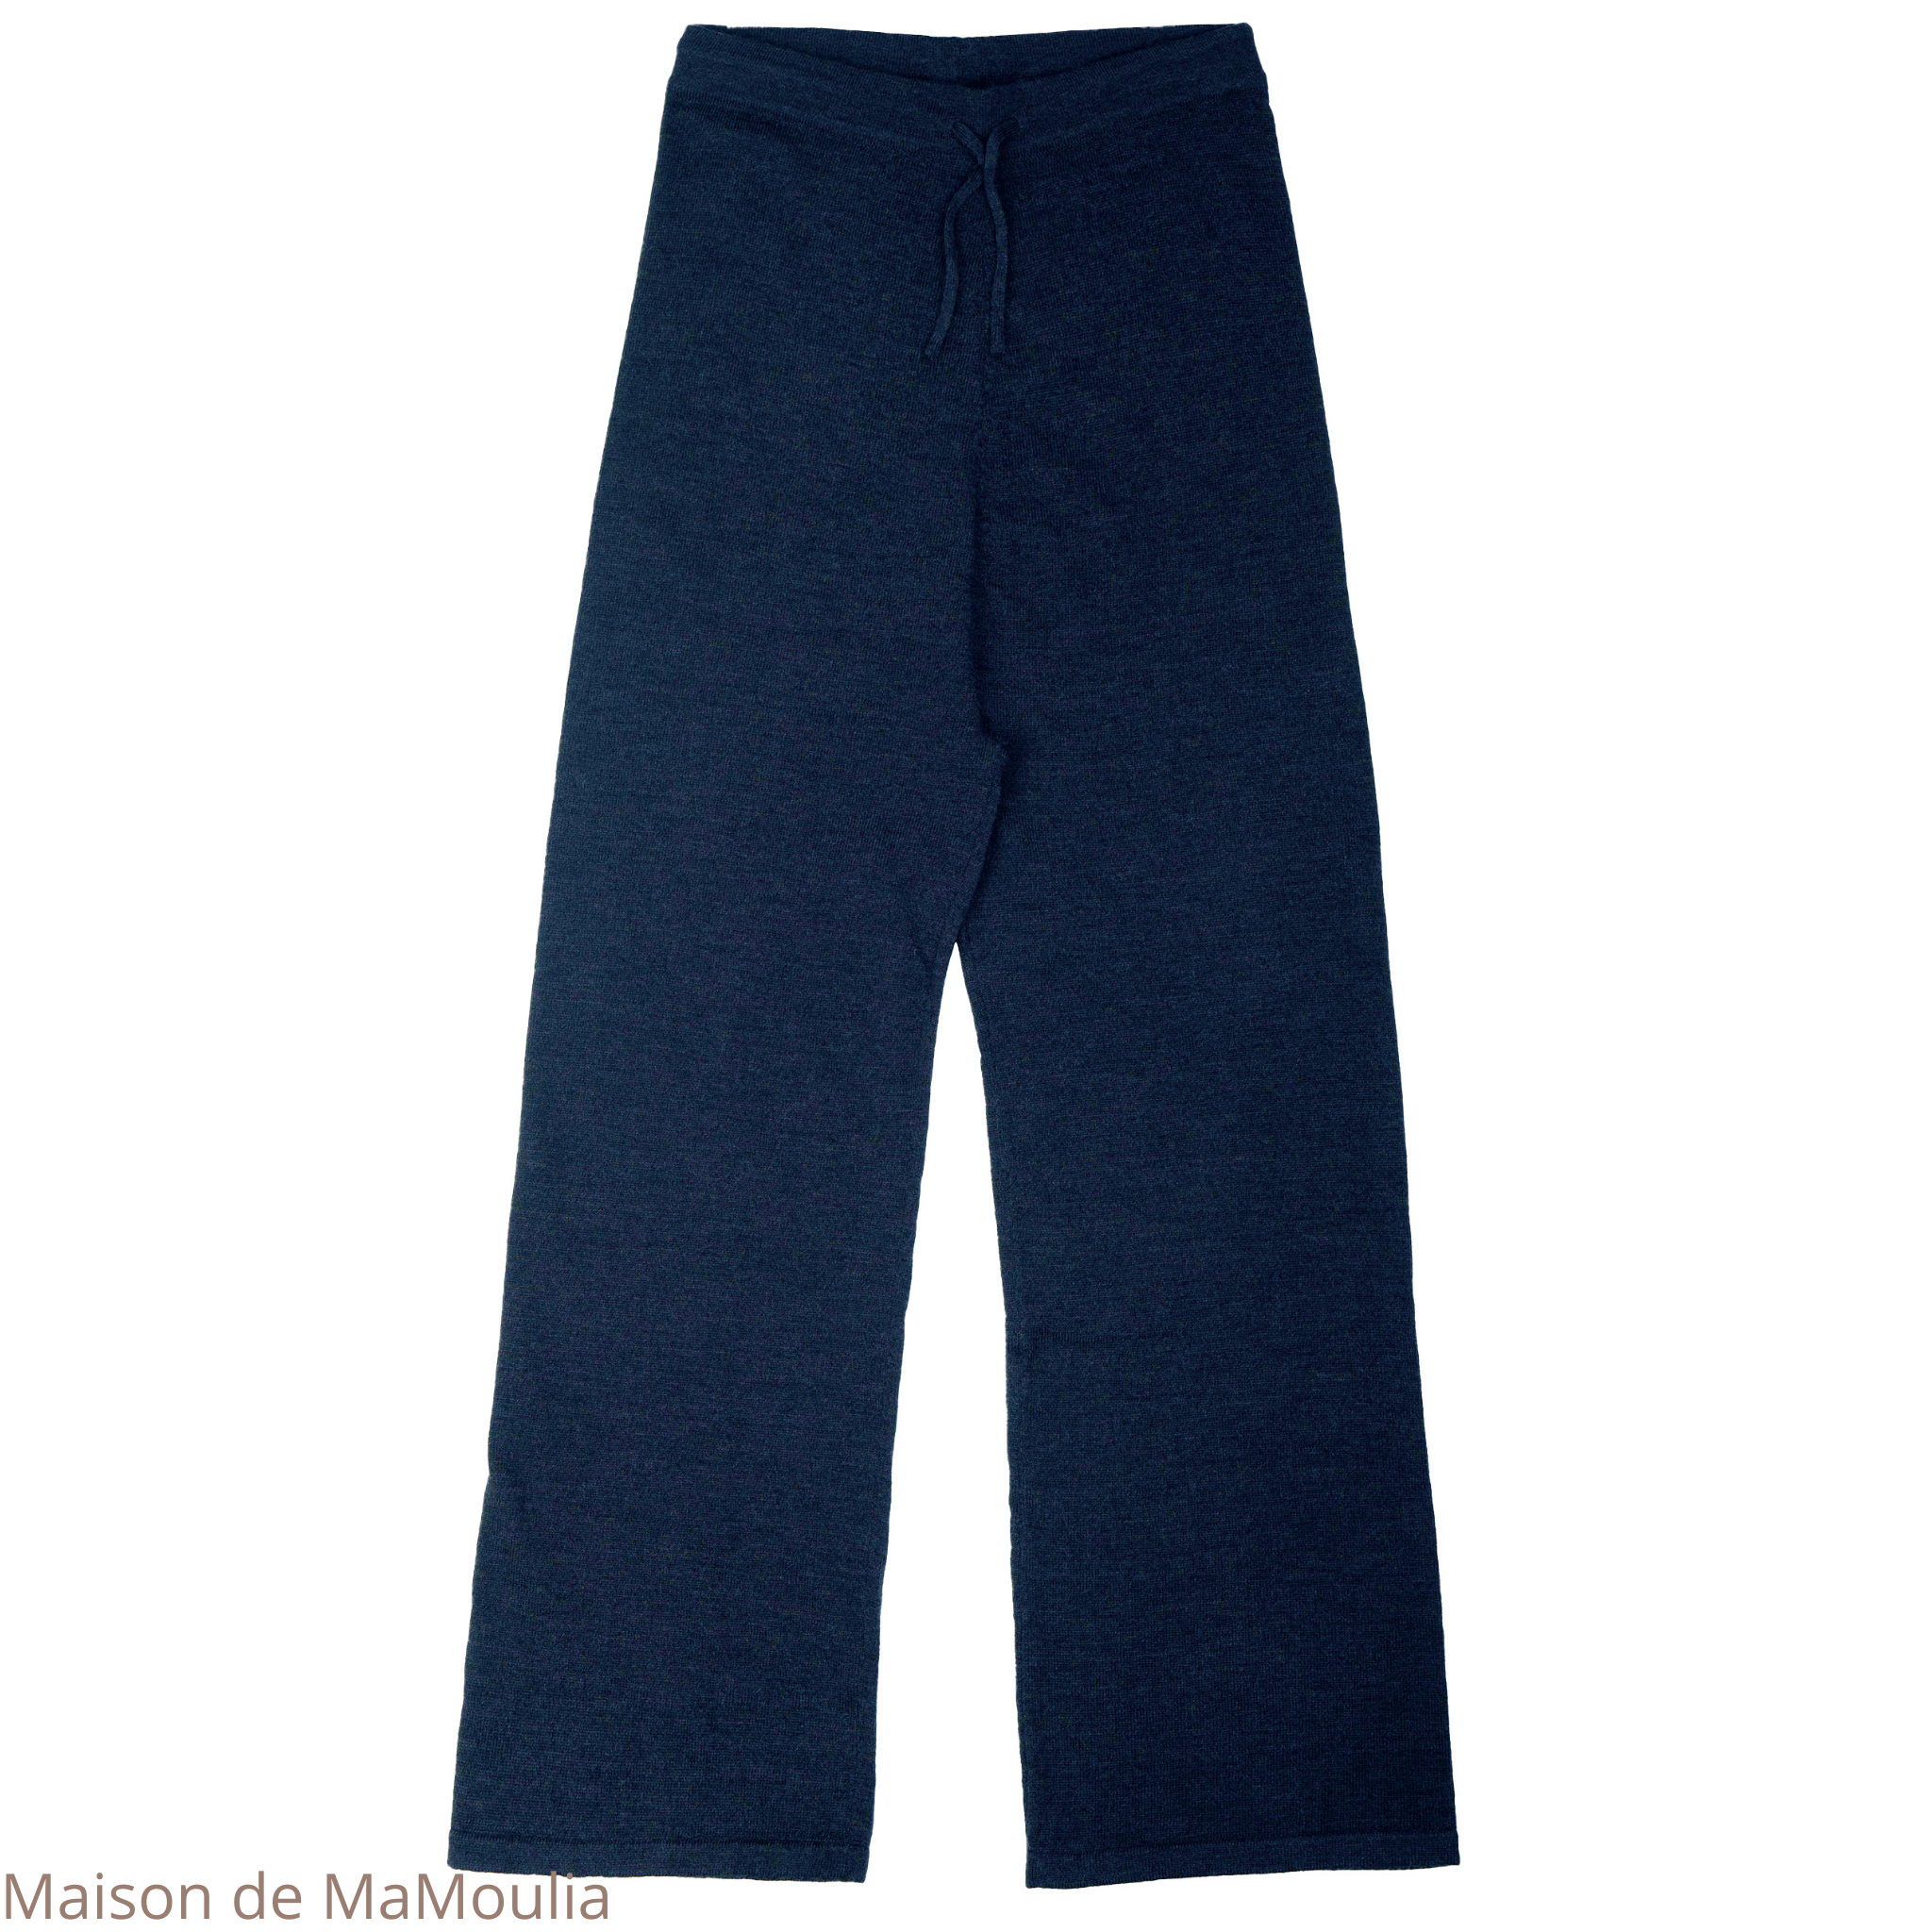 MINIMALISMA - Pantalon droit - 100% Laine mérinos - Dark blue